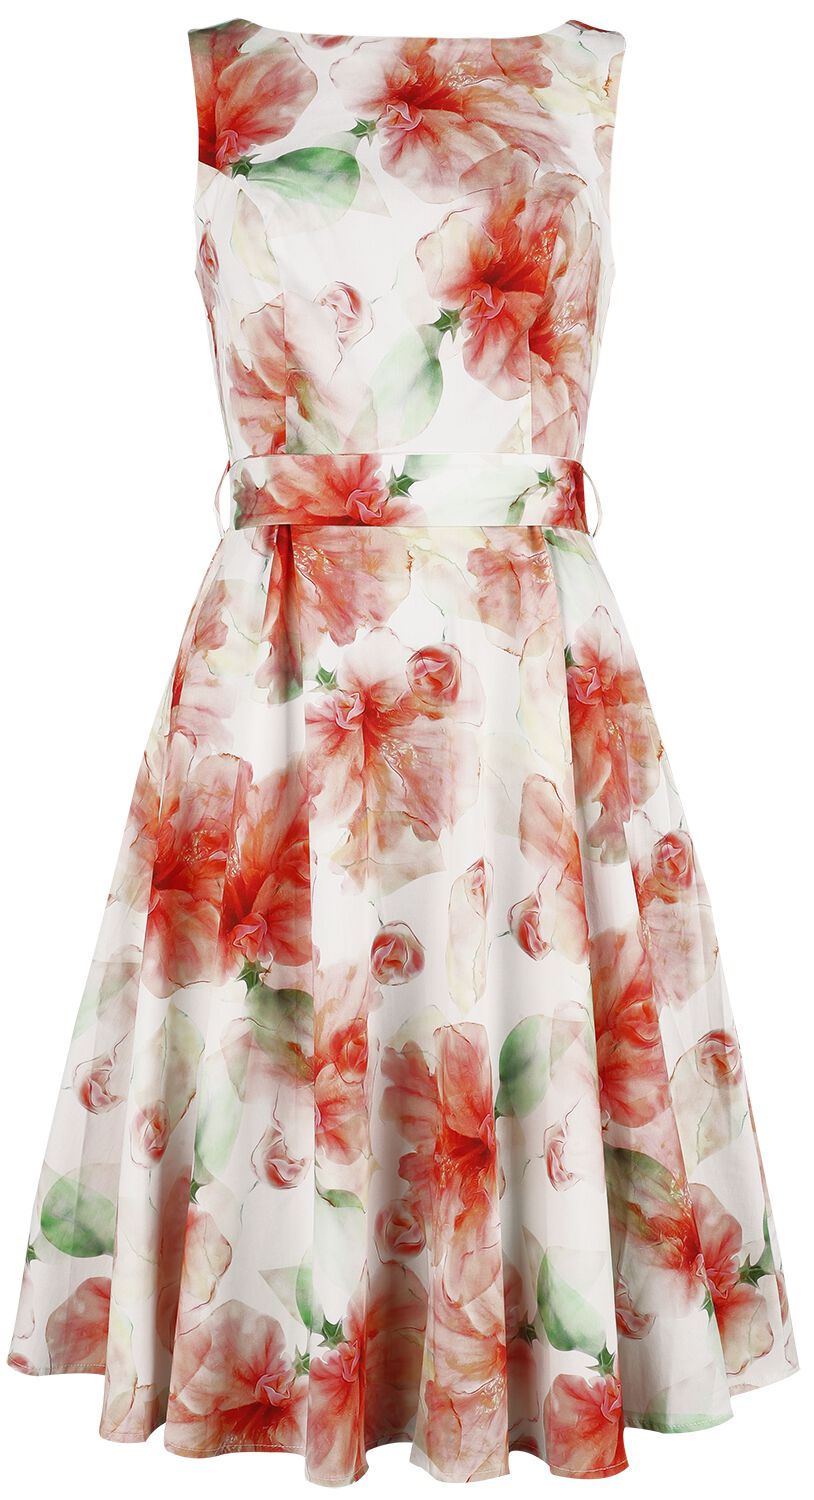 H&R London - Rockabilly Kleid knielang - Ayla Floral Swing Dress - XS bis 4XL - für Damen - Größe S - multicolor